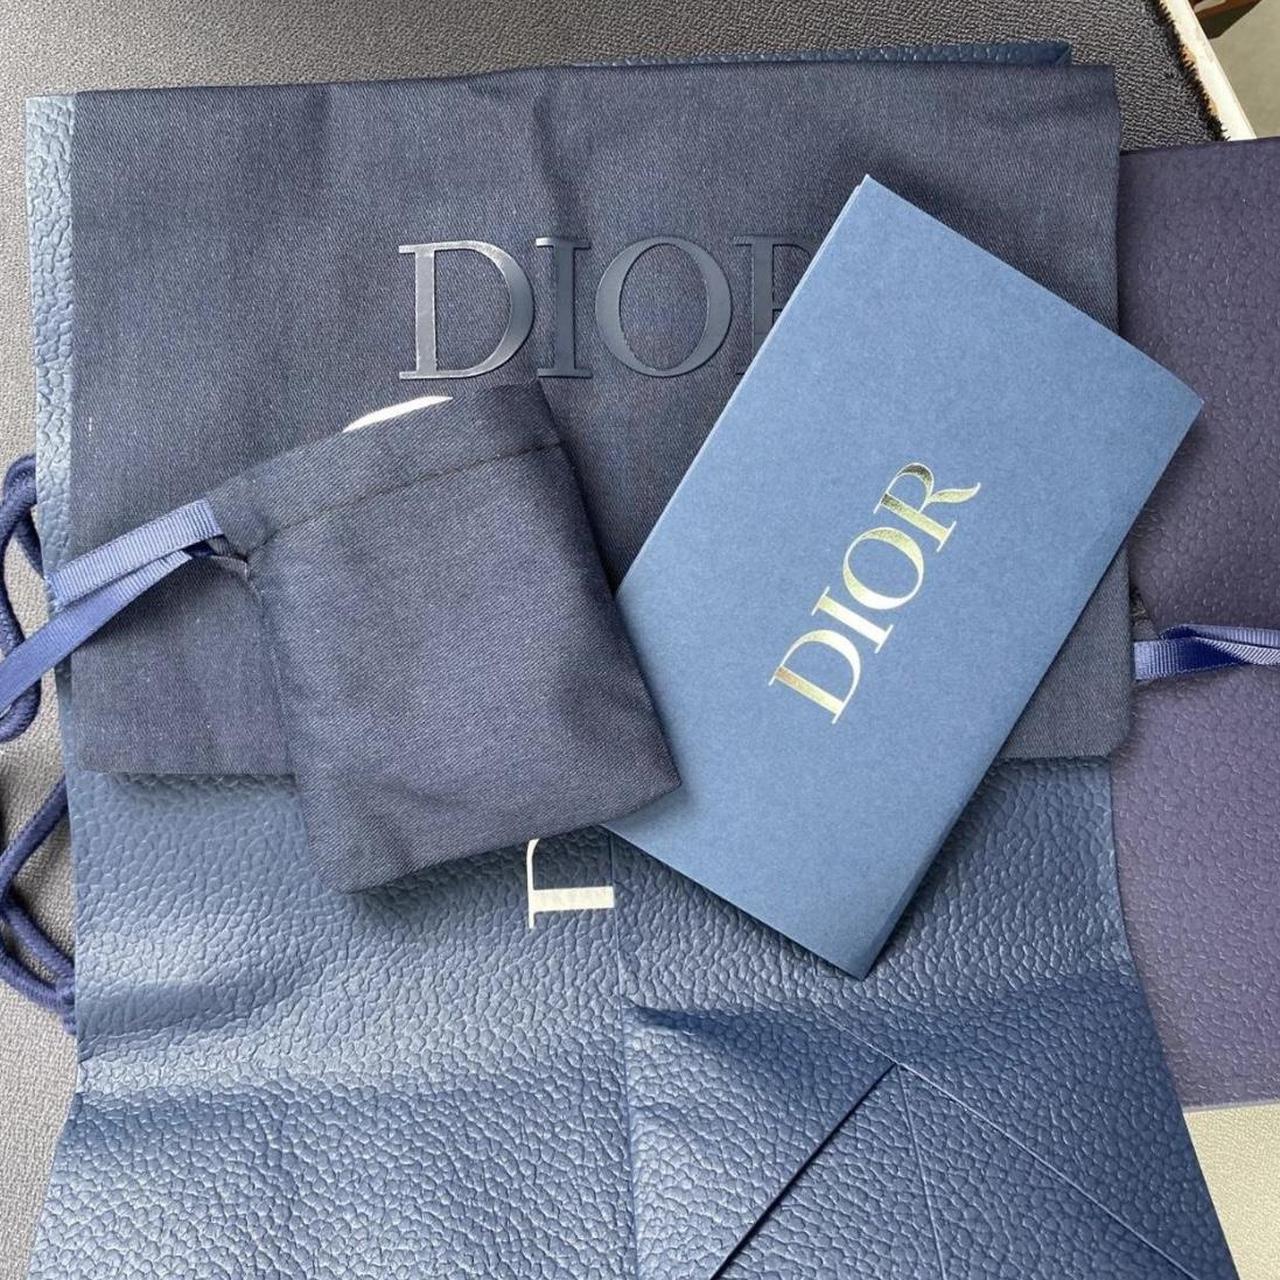 Dior b30 Black/white Size 42 / Uk 8 Brand new... - Depop